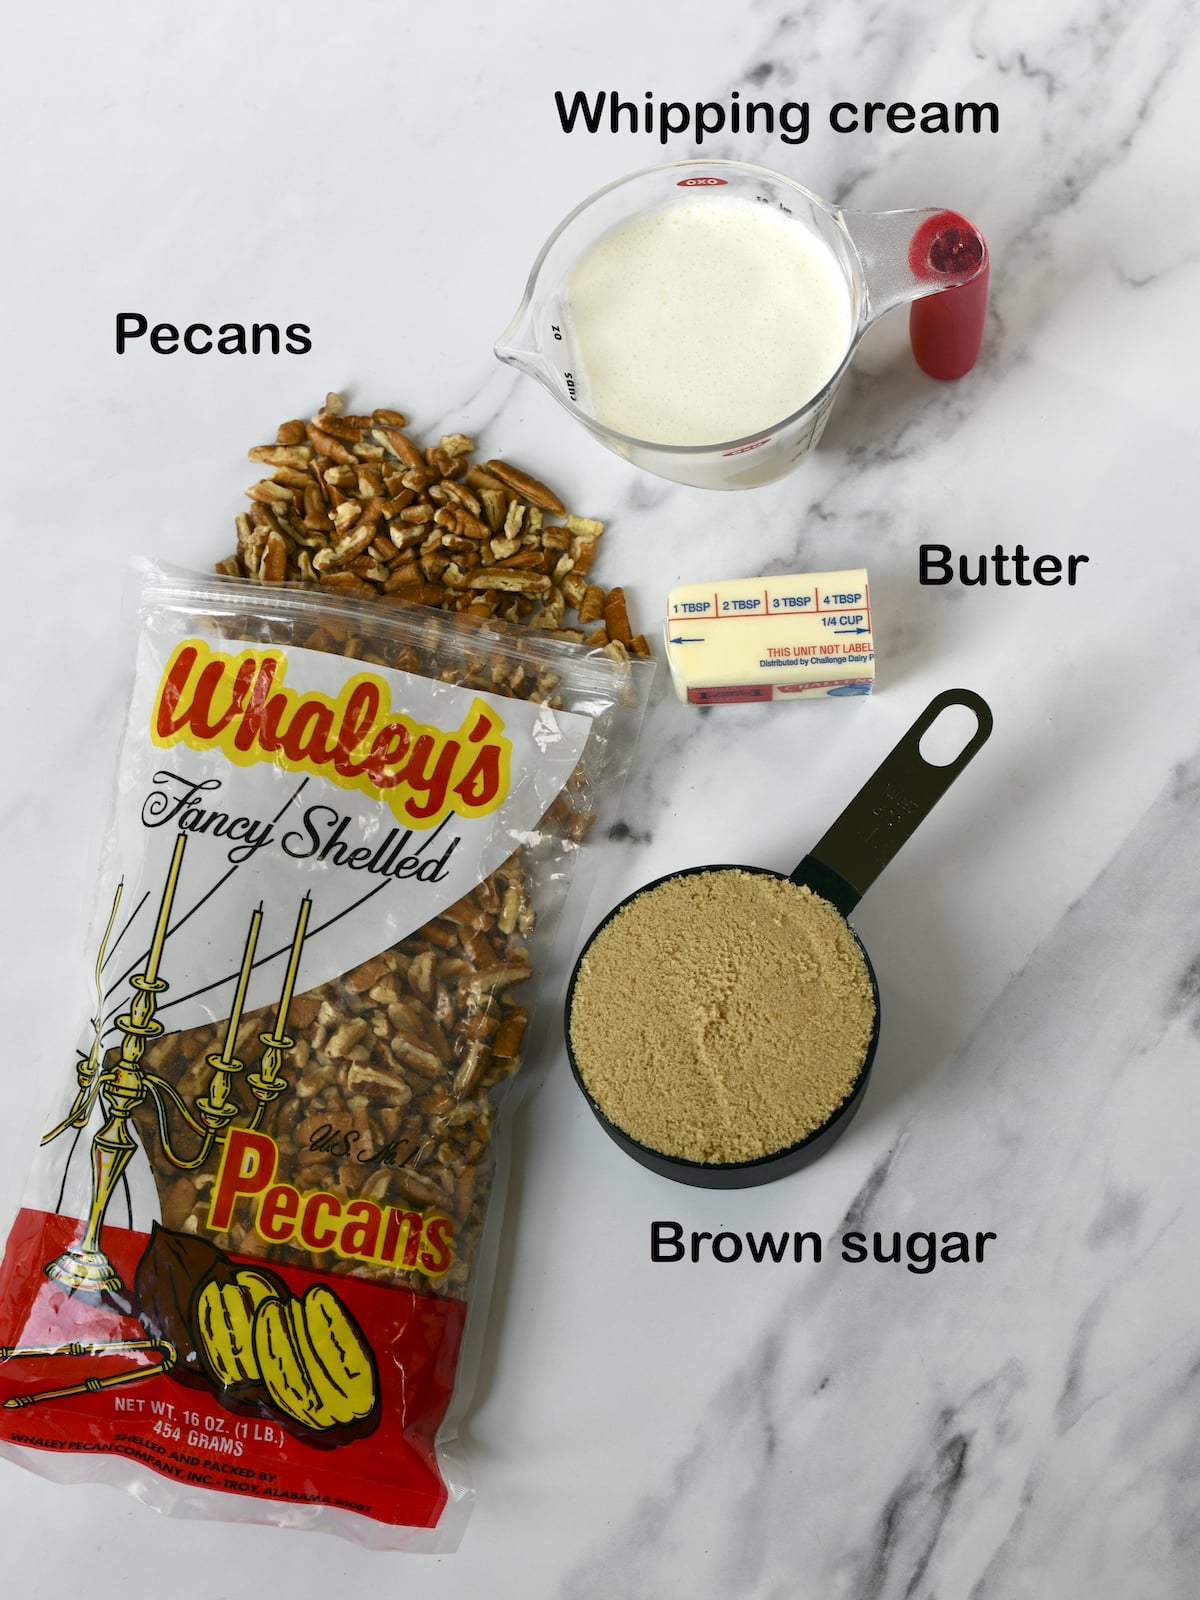 Ingredients for easy praline pecan sauce: pecans, brown sugar, whipping cream, butter.